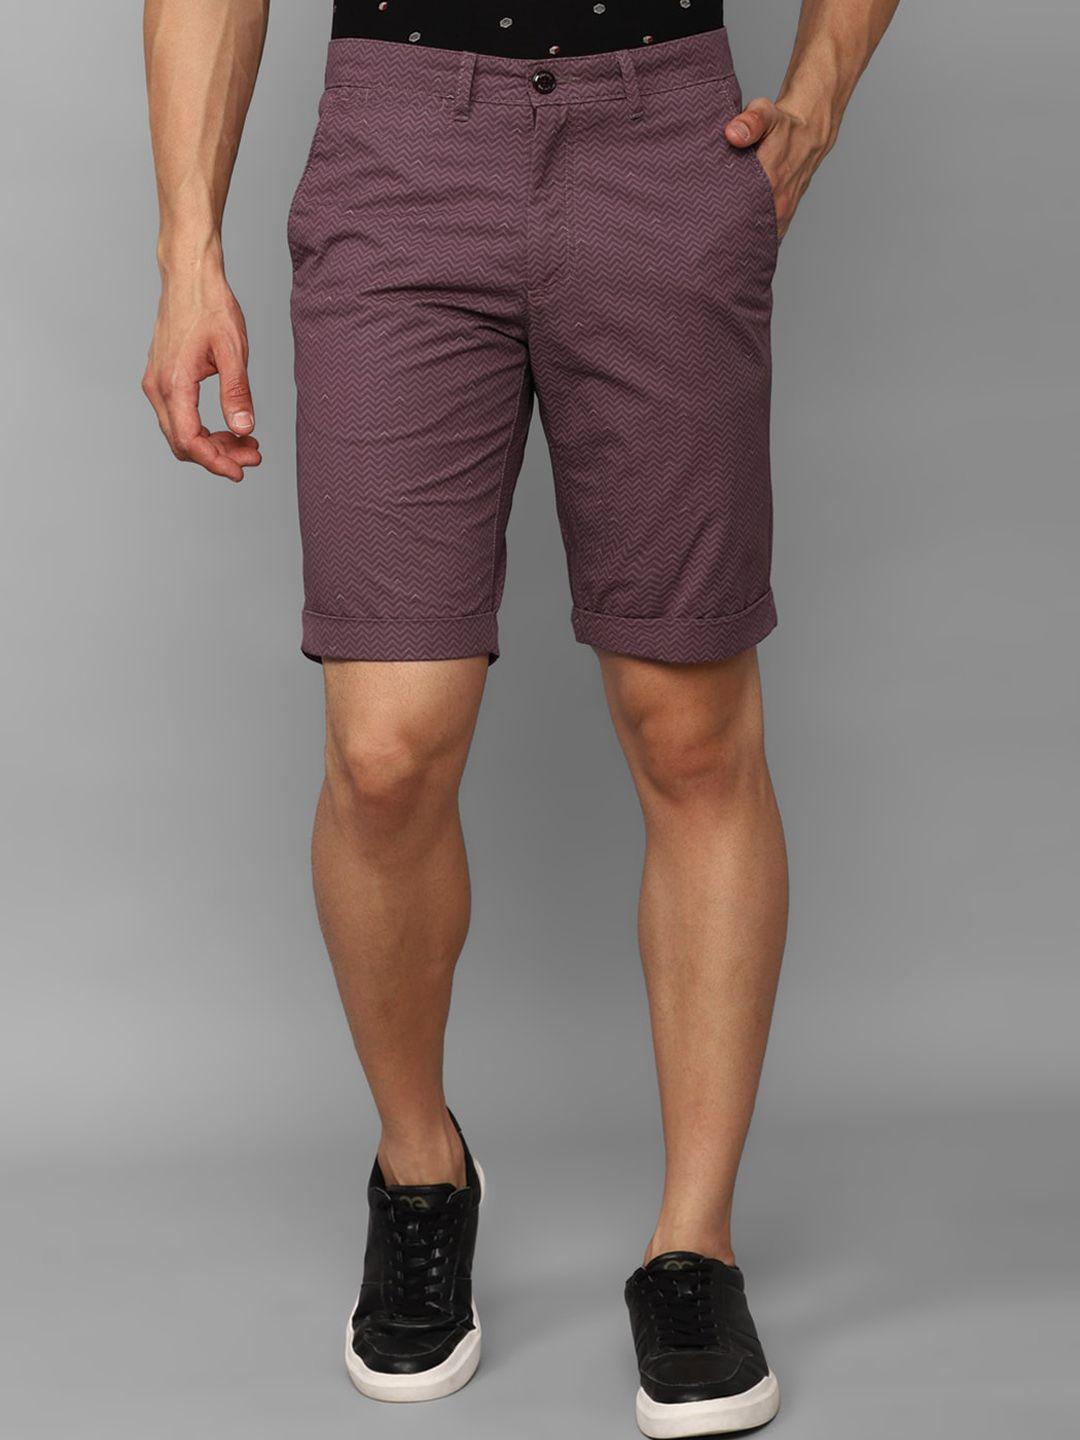 allen-solly-men-chevron-printed-slim-fit-pure-cotton-shorts